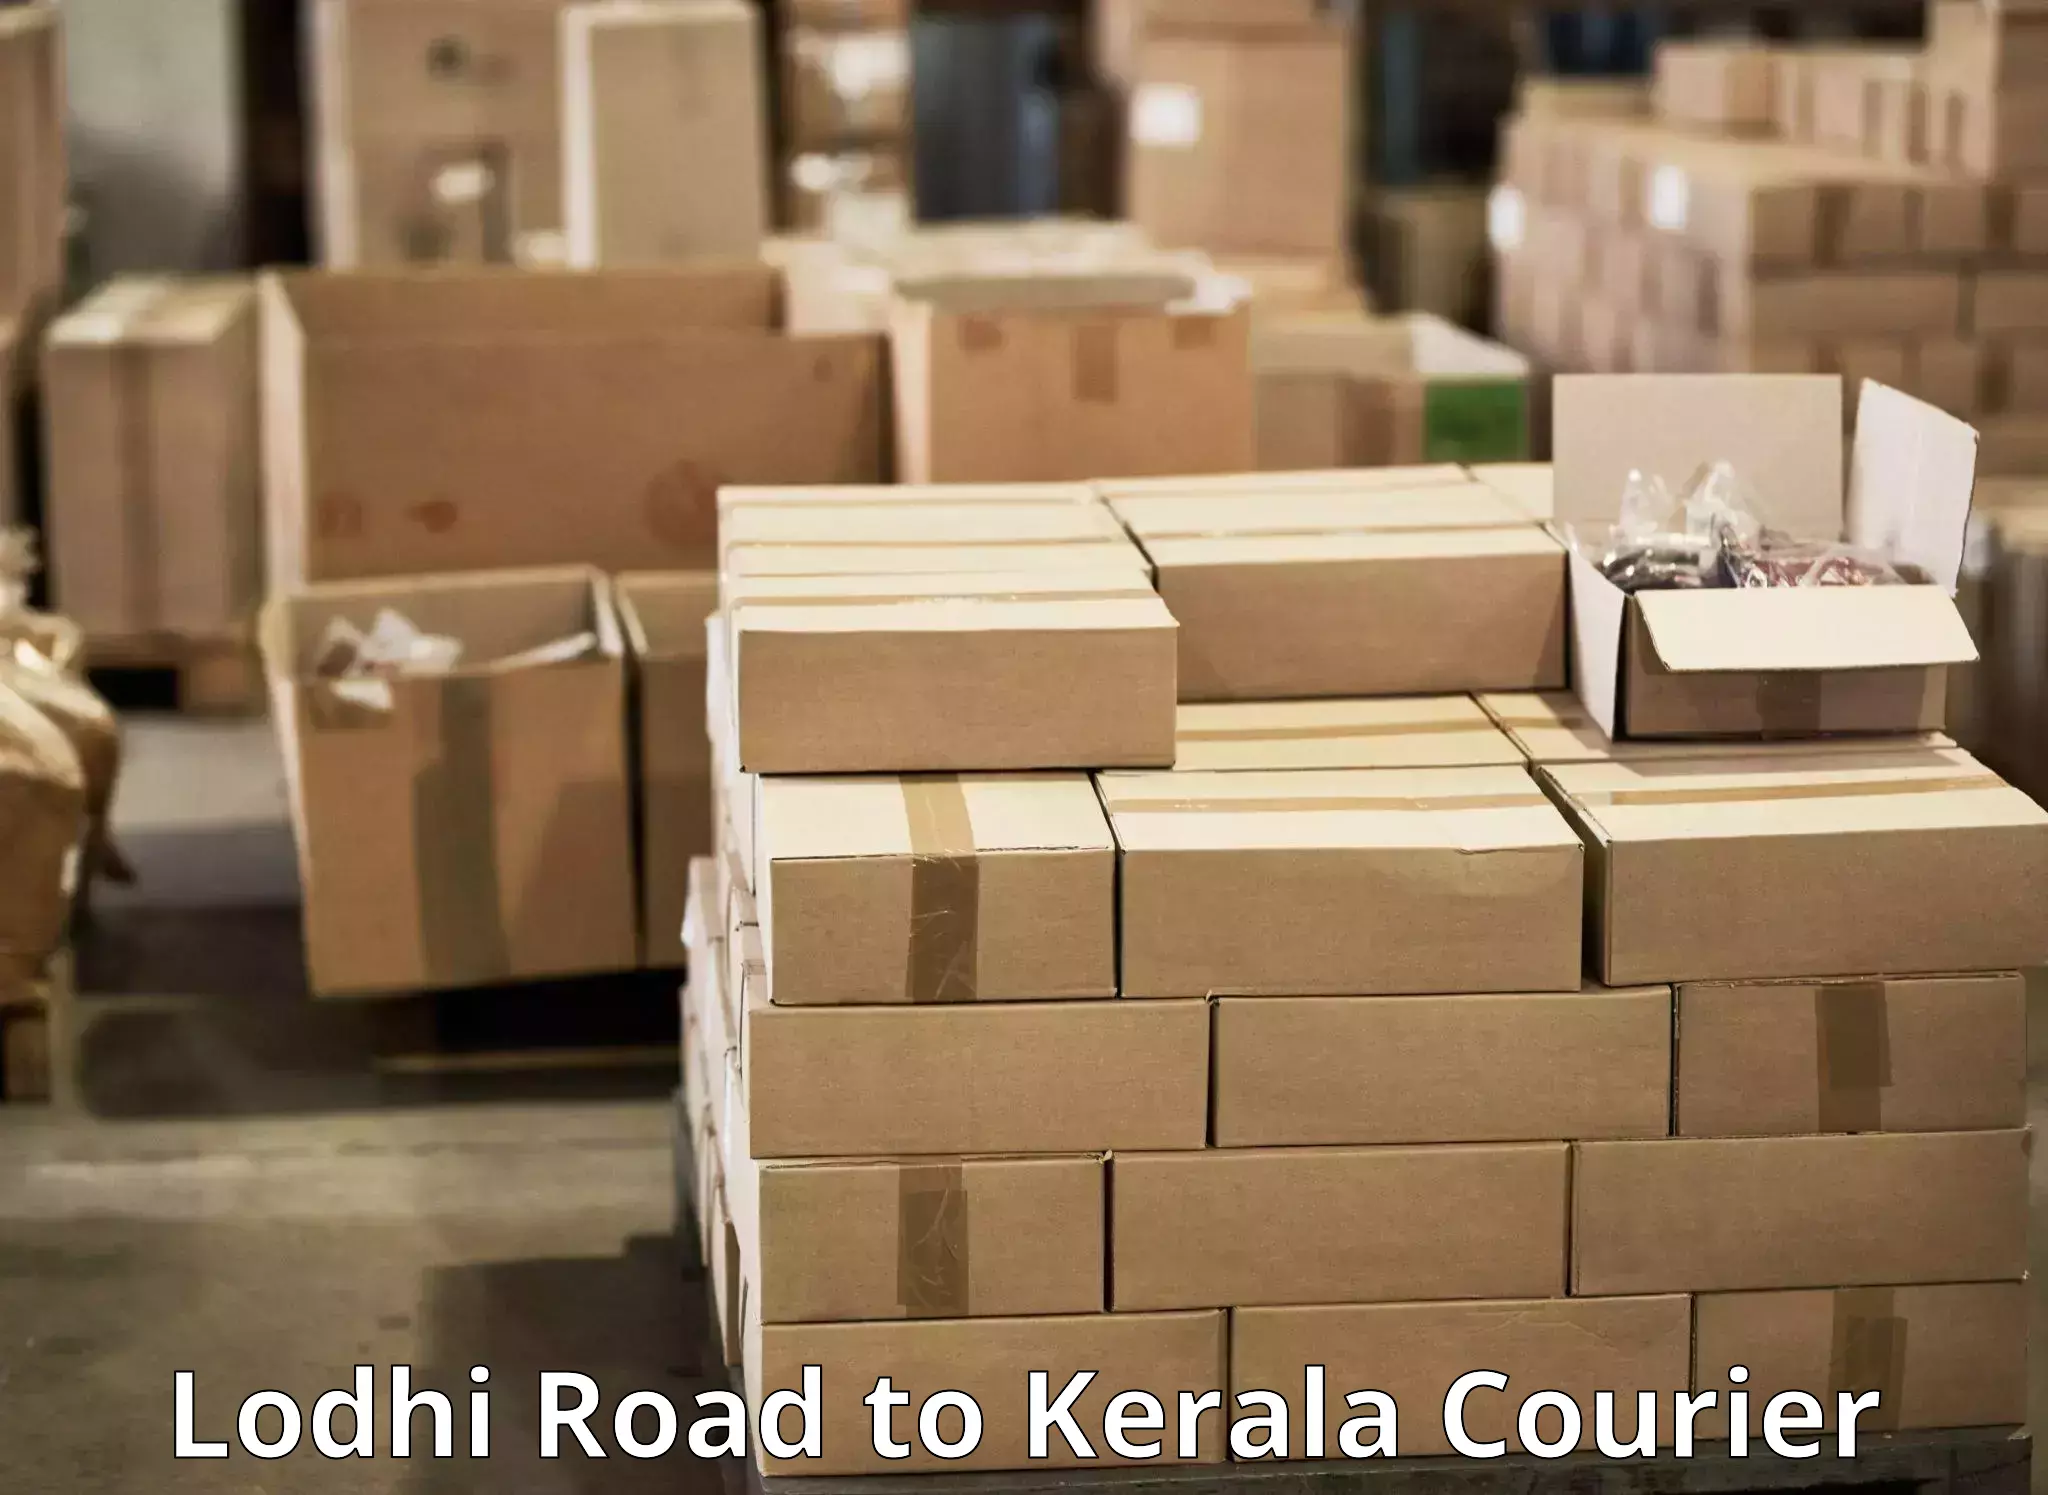 Global shipping networks Lodhi Road to Kakkayam